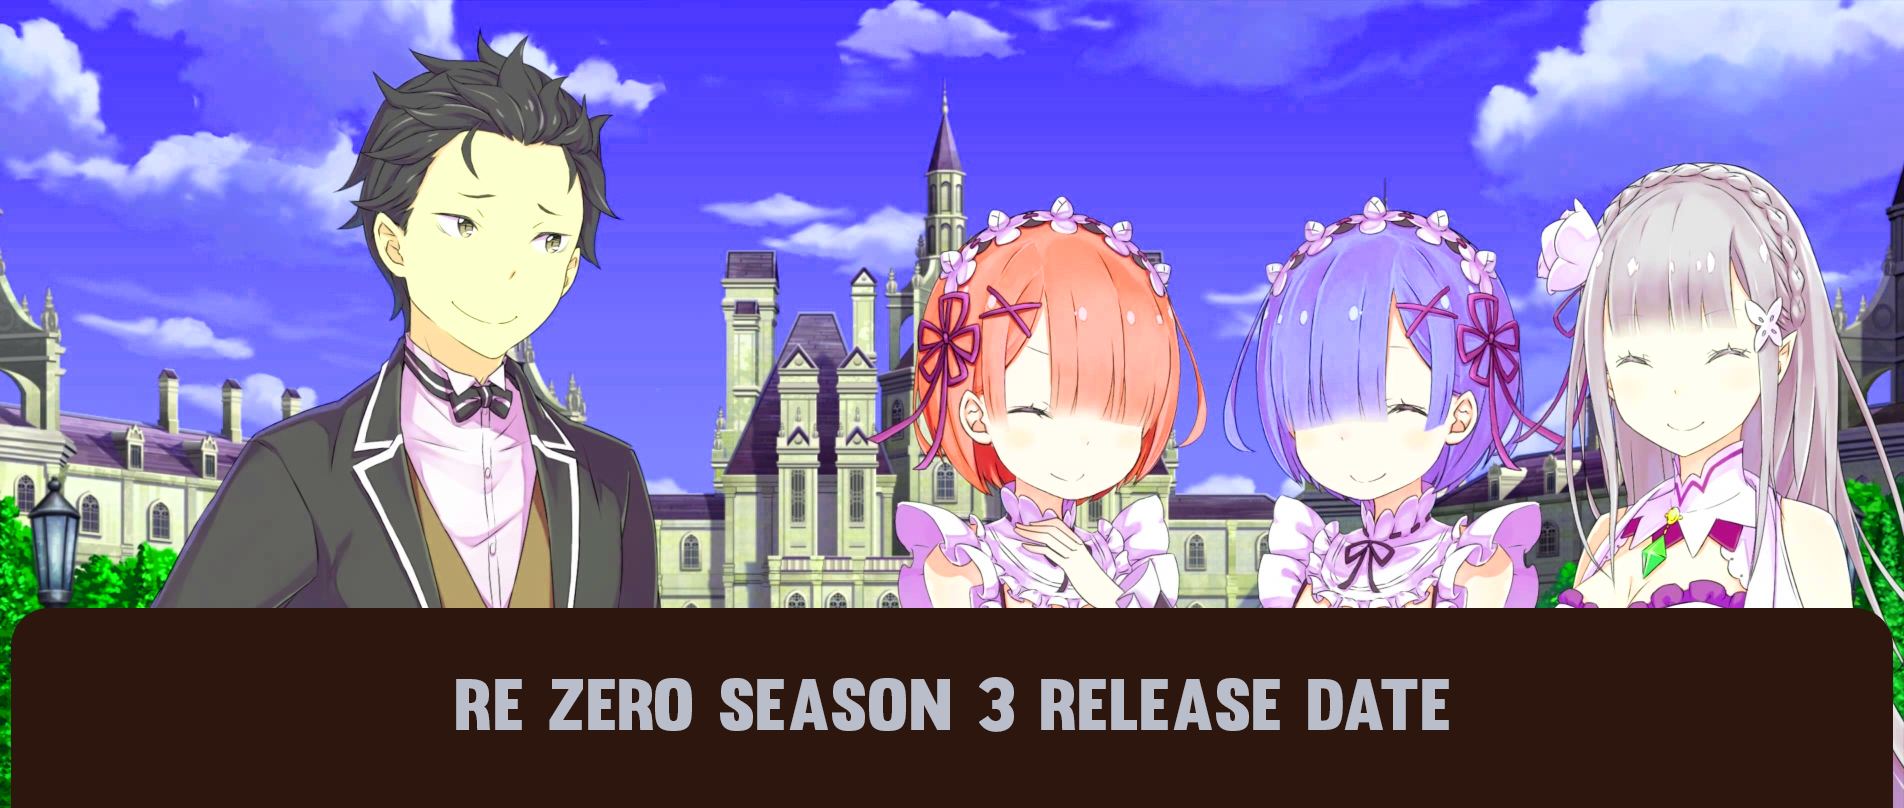 The interest of people towards the re-zero season 3 release date